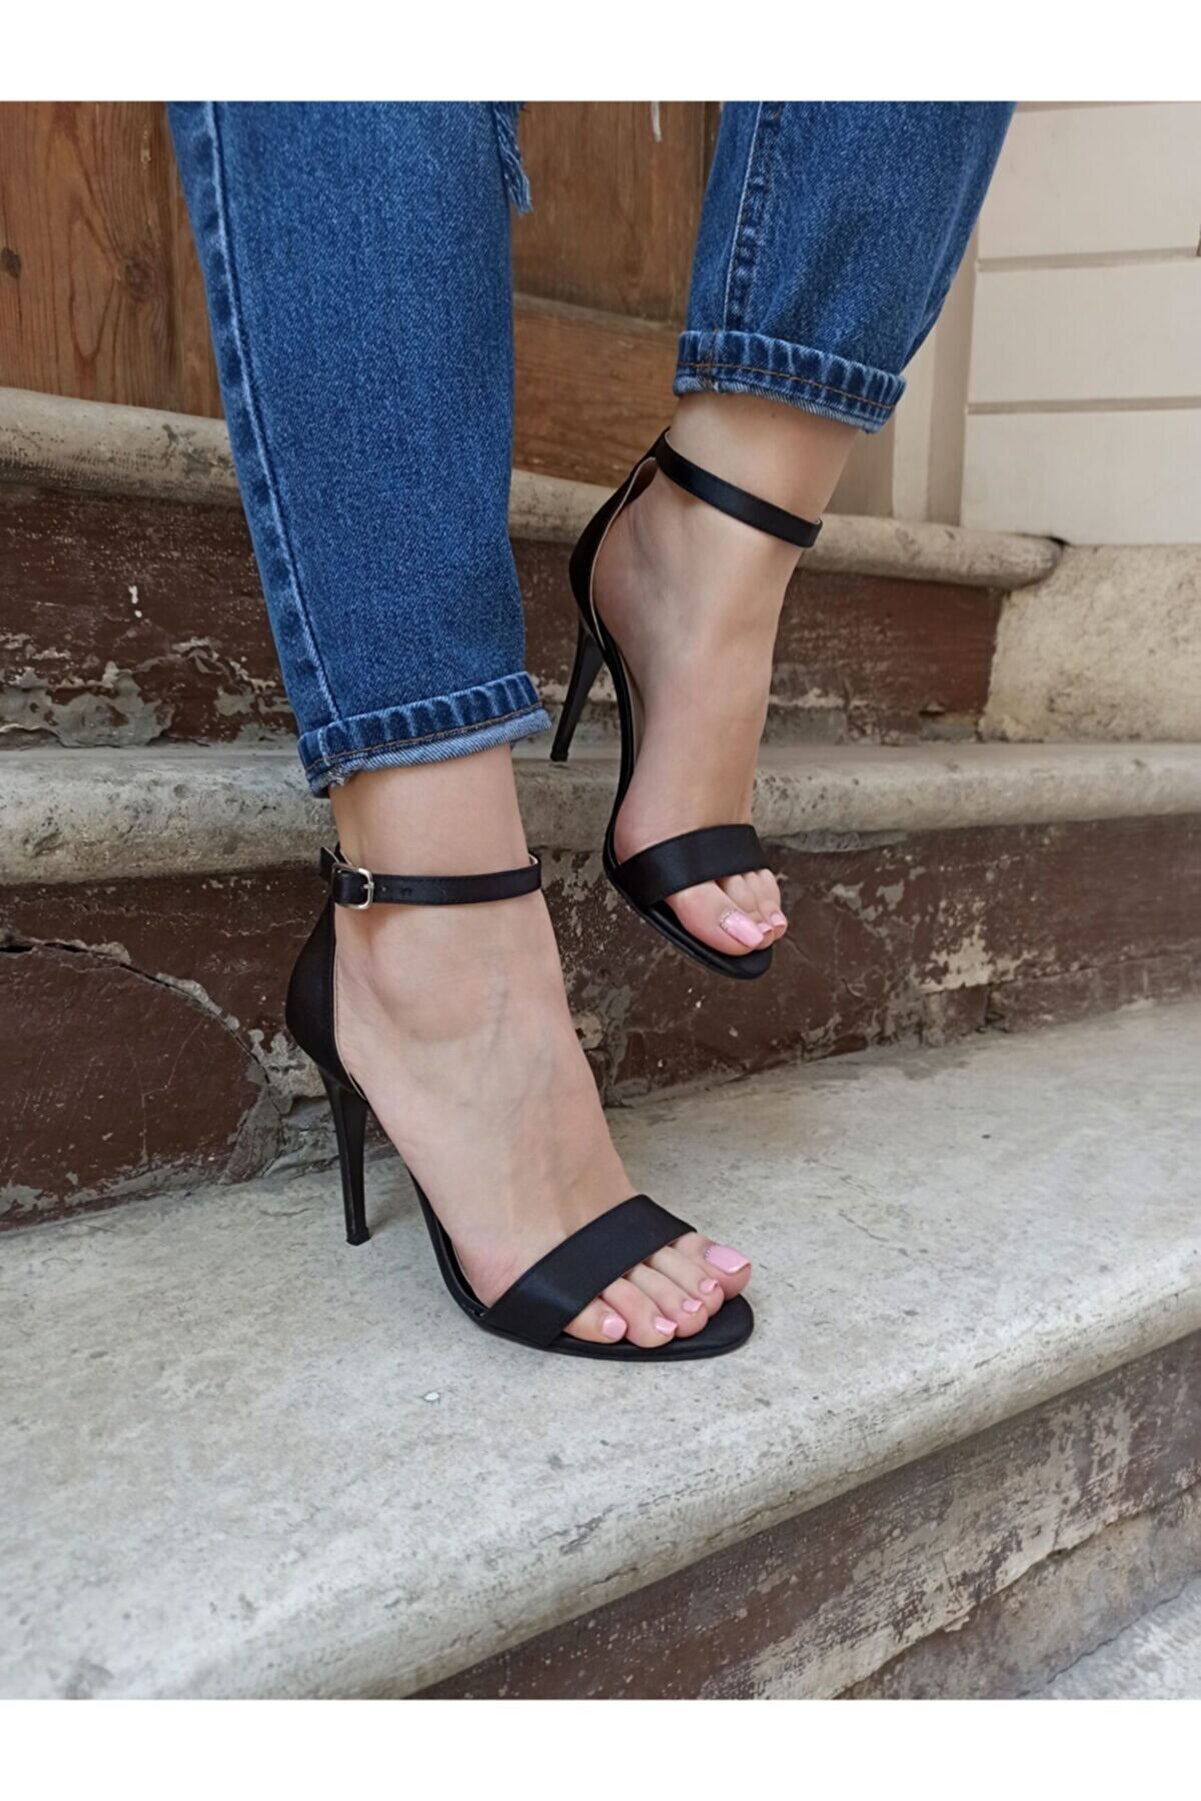 Atelierby DS Kadın Siyah Saten Ince Topuk Tek Bant Topuklu Ayakkabı